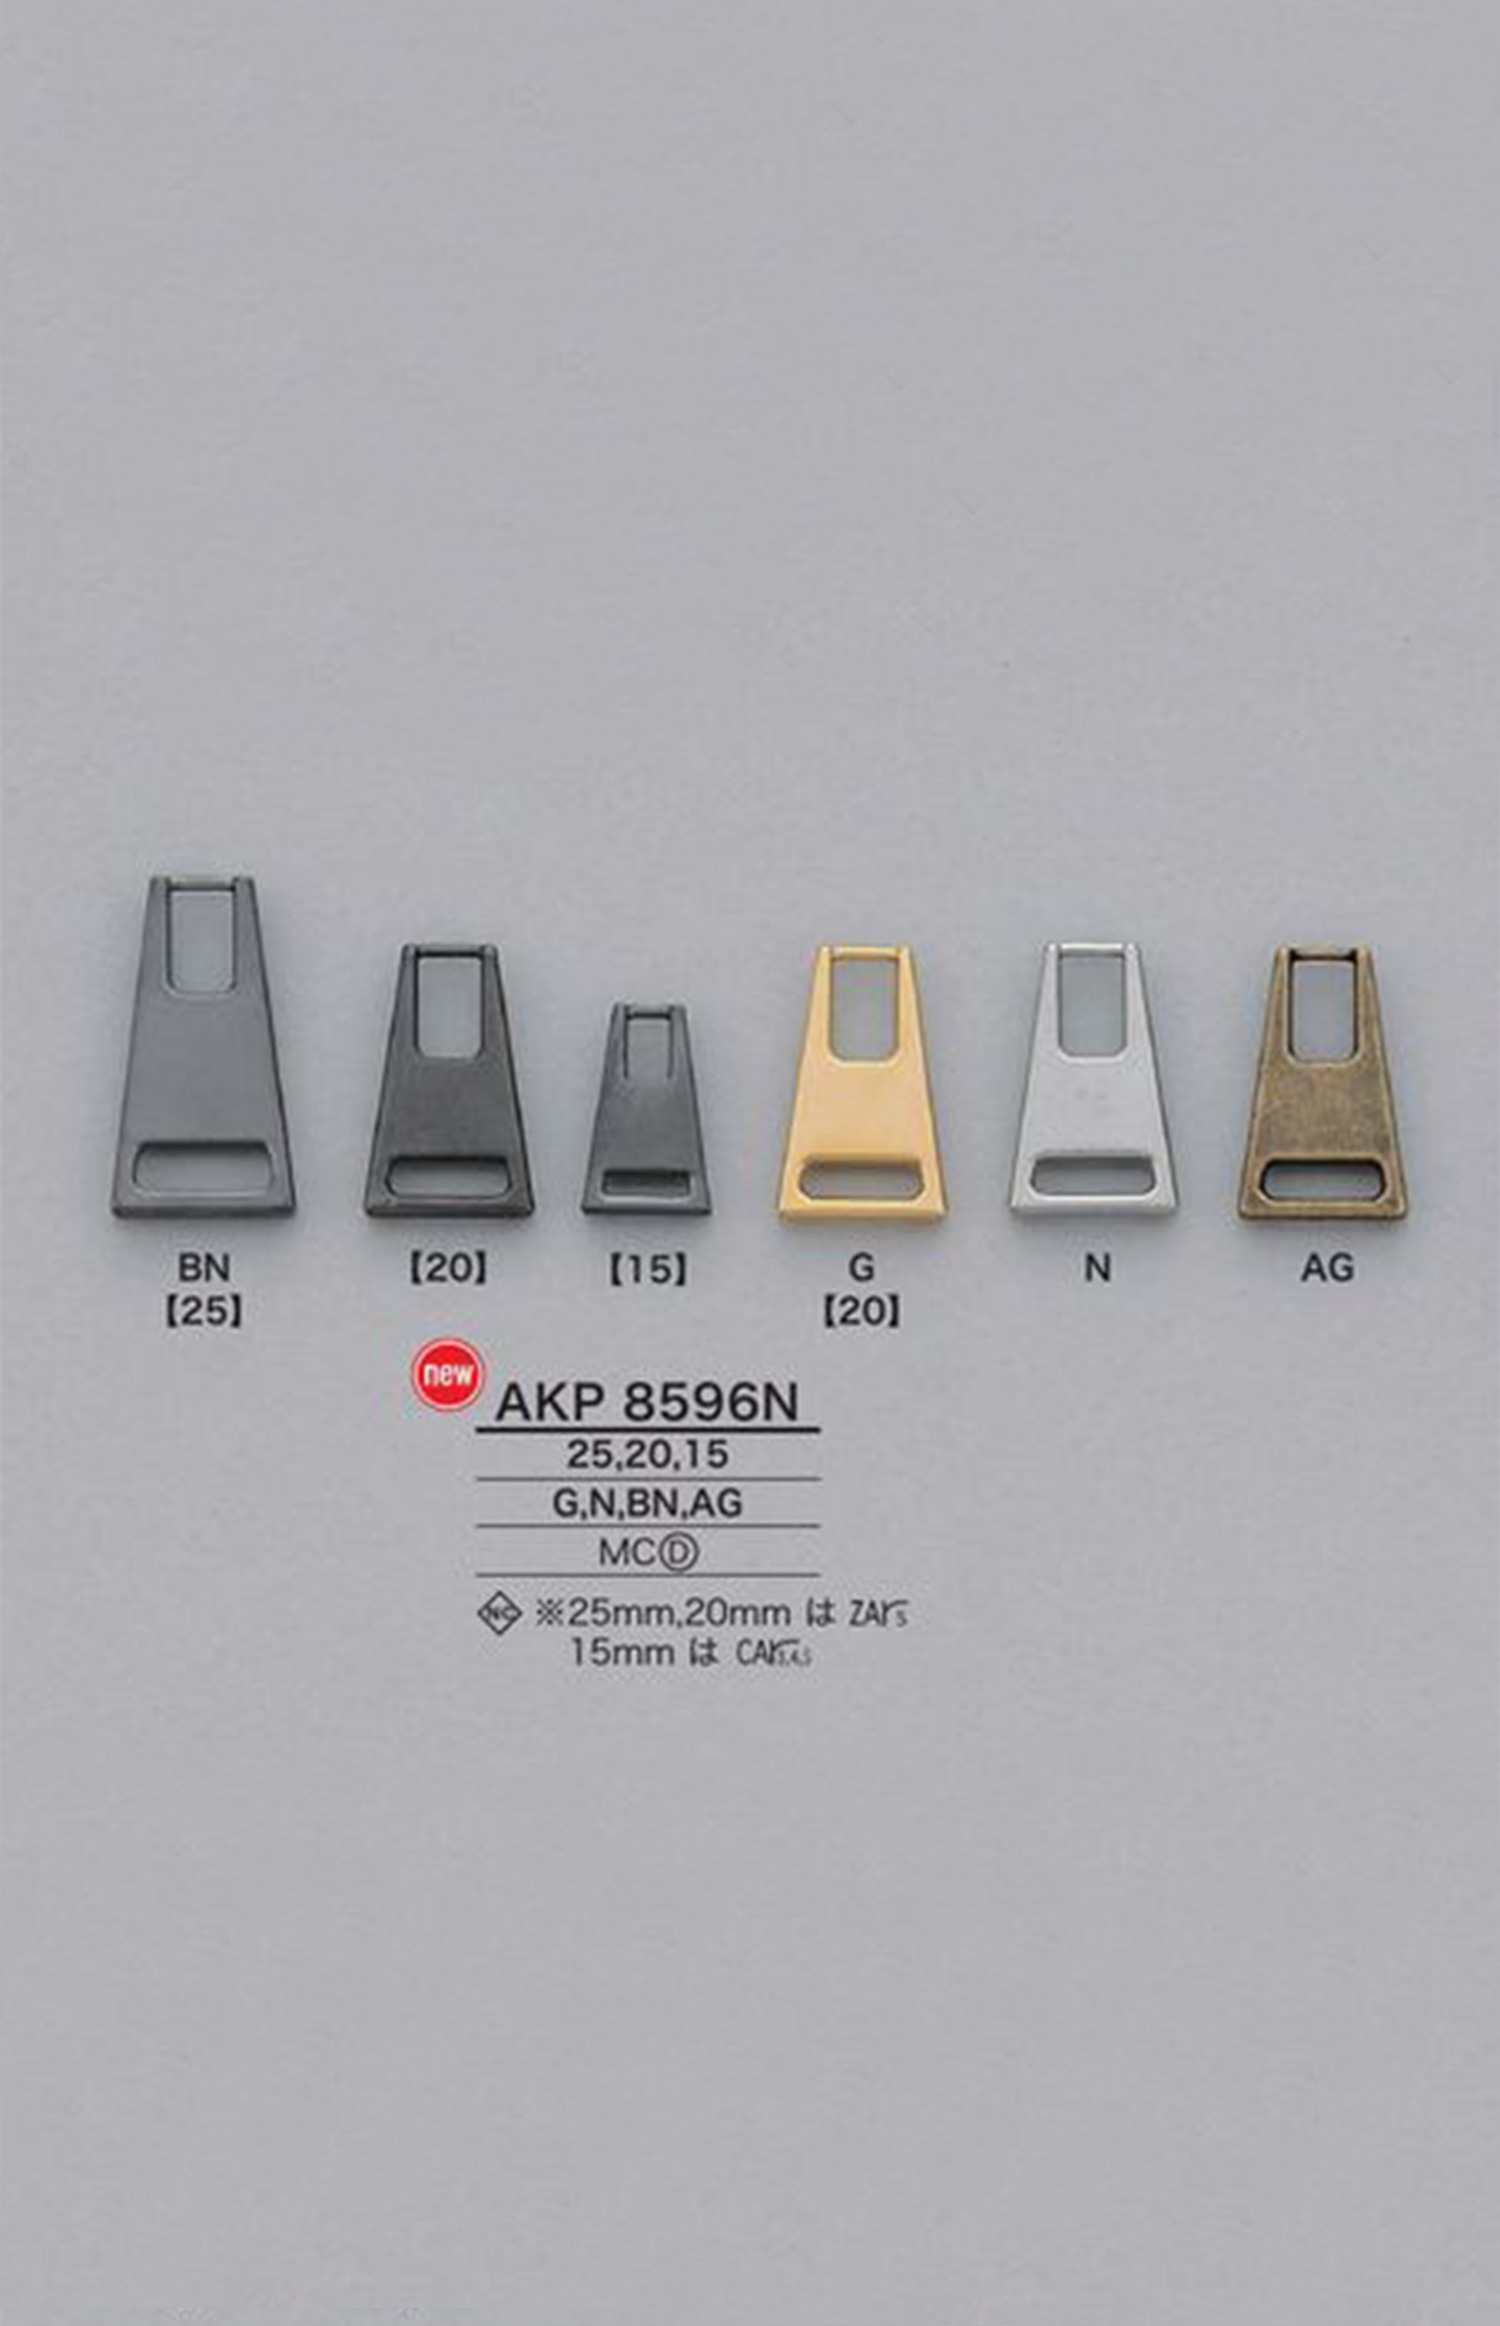 AKP8596N Zipper Point (Pull Tab) IRIS